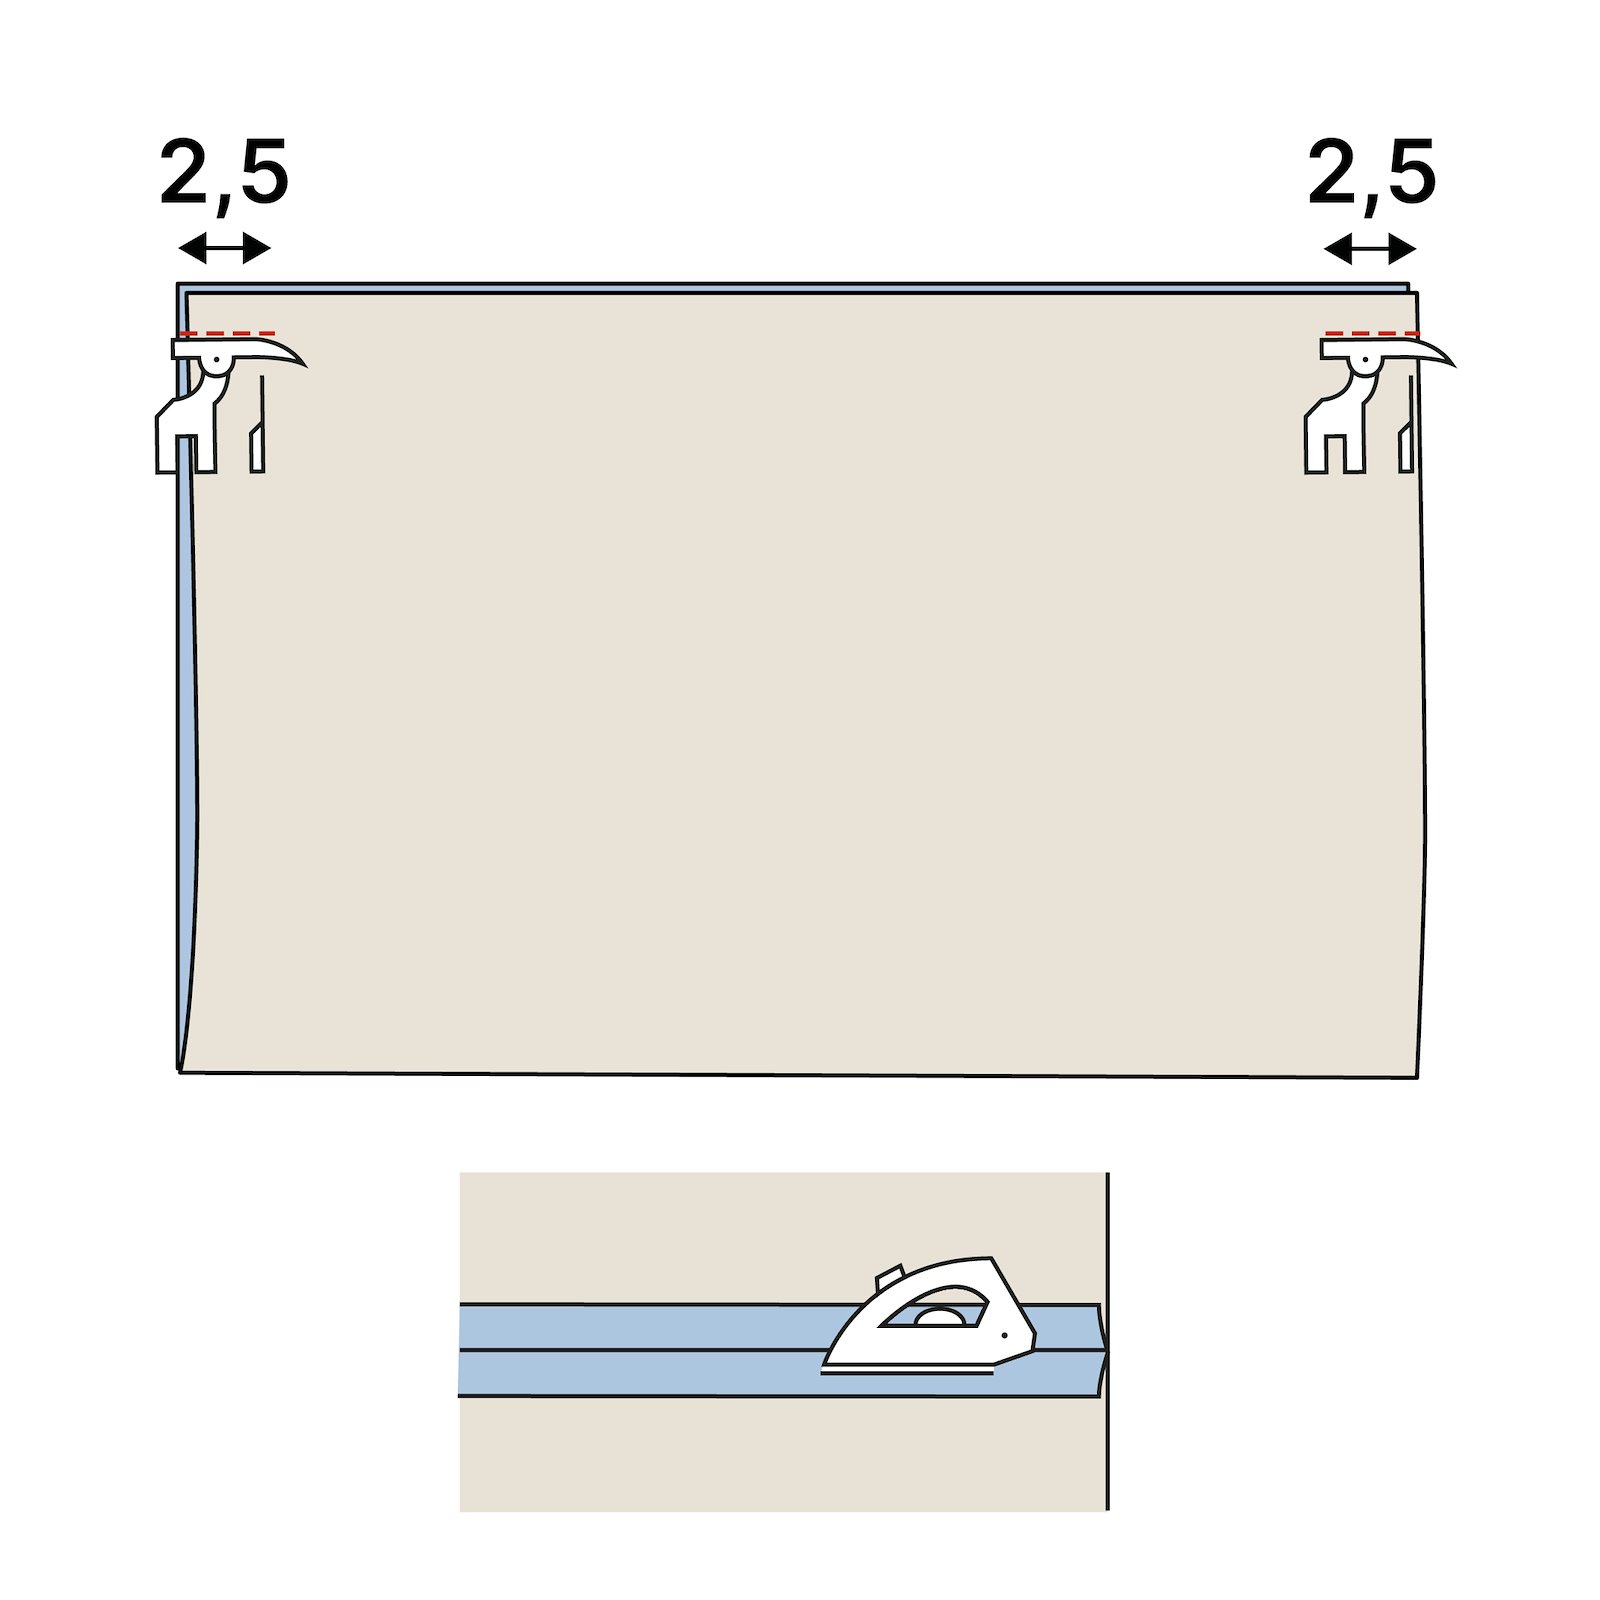 Sewing pattern: Headrest cushion cover DIY5021-step2.jpg